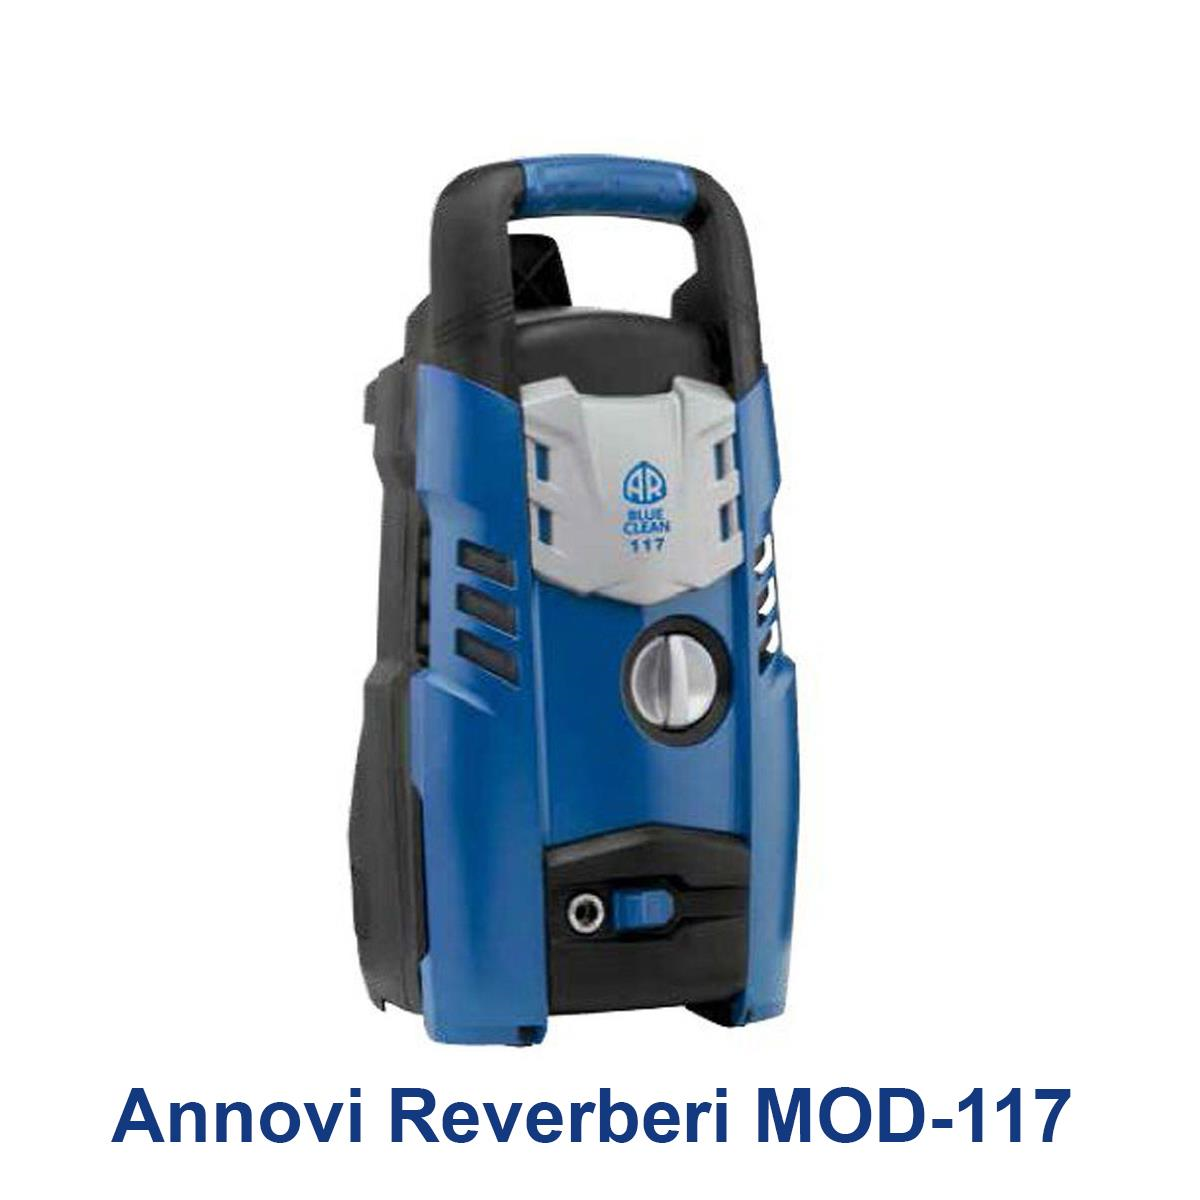 Annovi-Reverberi-MOD-117